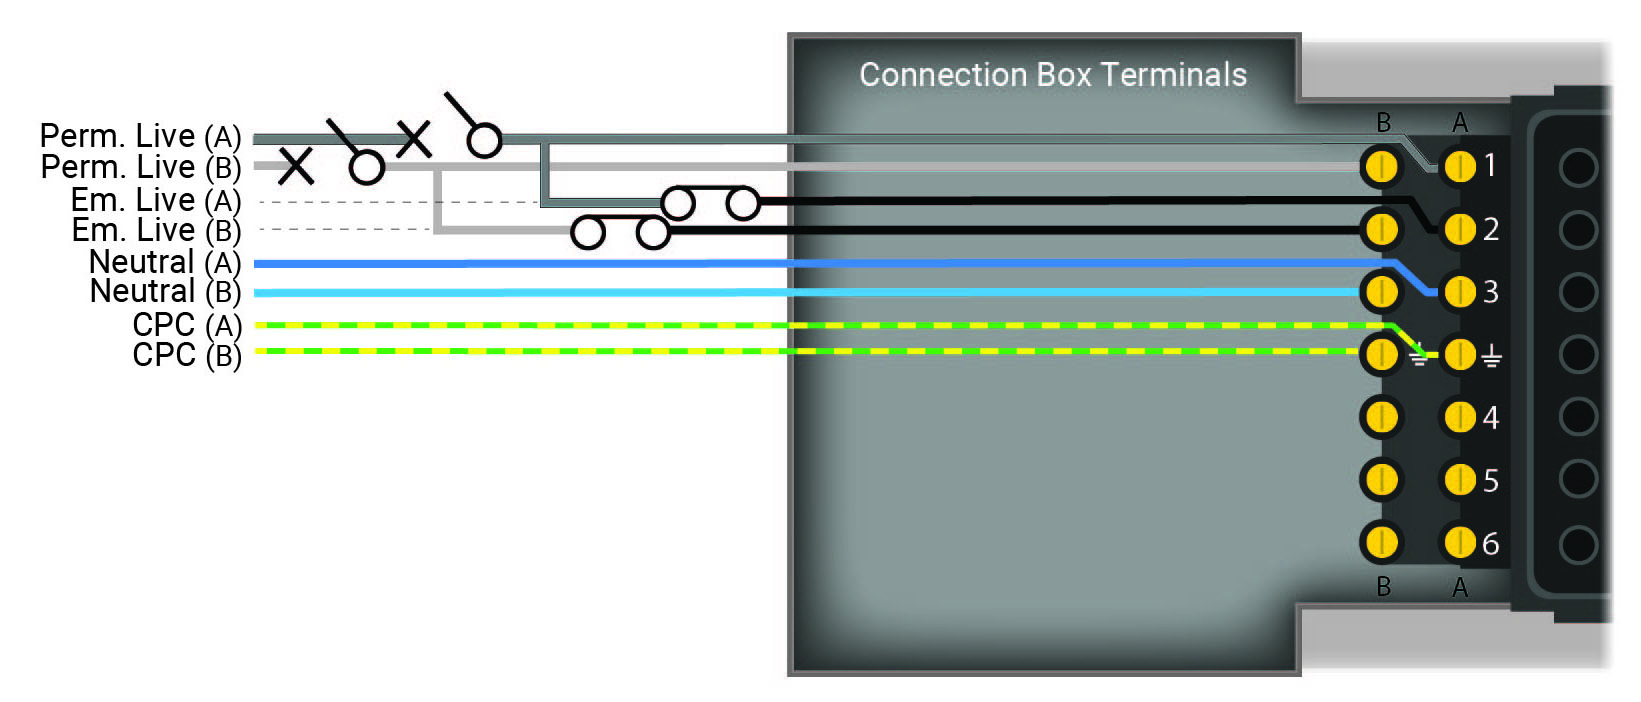 flex7 Dual Supply Box wiring diagram. Using plug-in controls without emergency test.